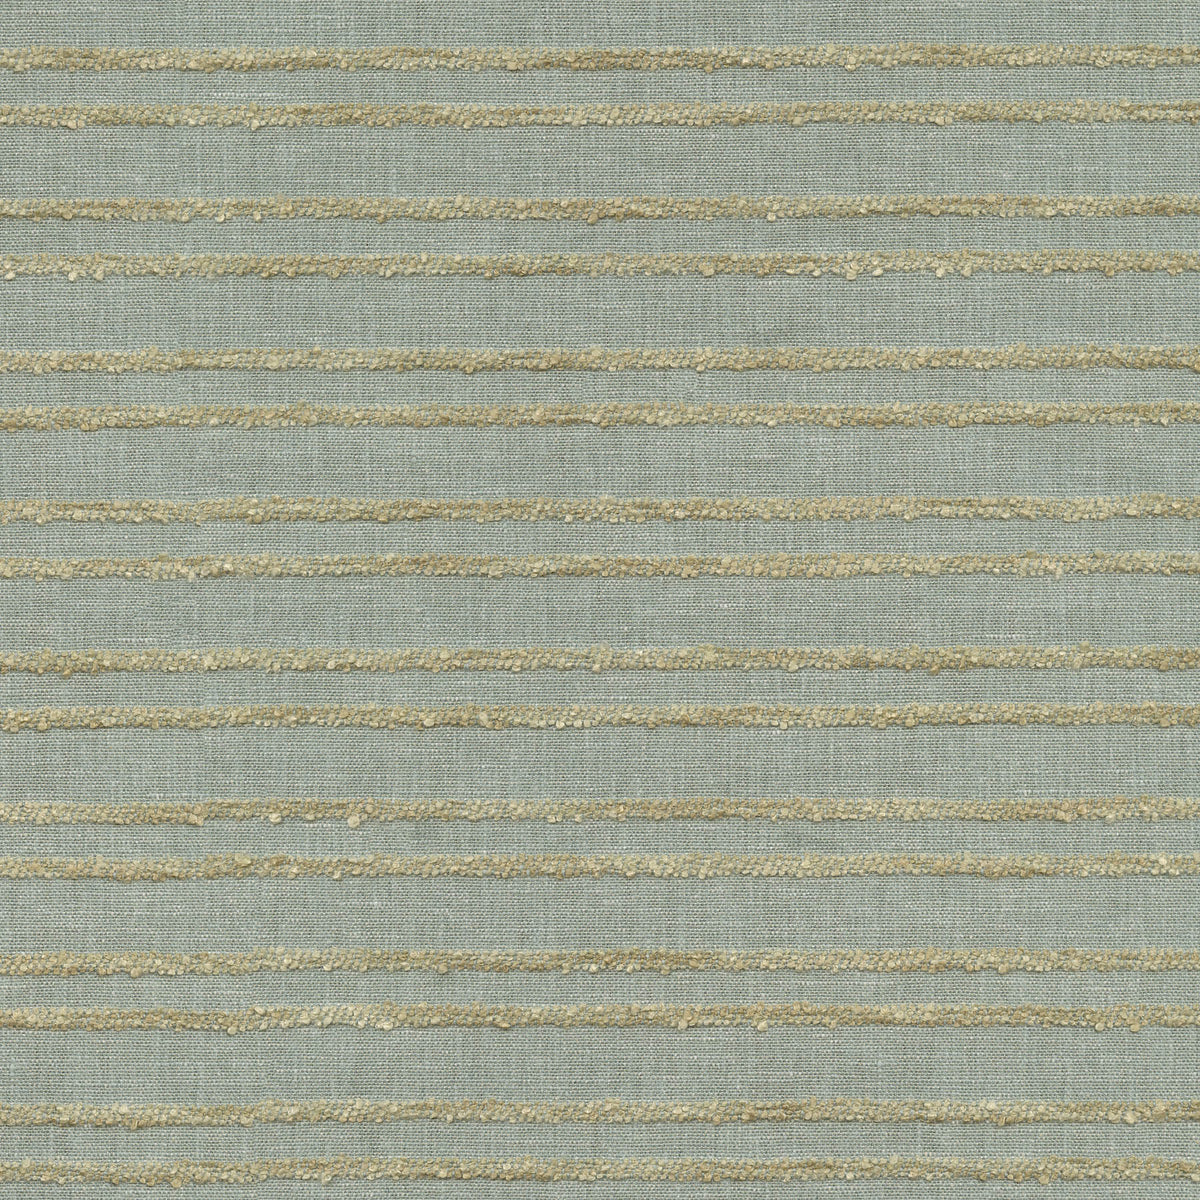 P/K Lifestyles Stanton Stripe - Seaglass 470800 Upholstery Fabric